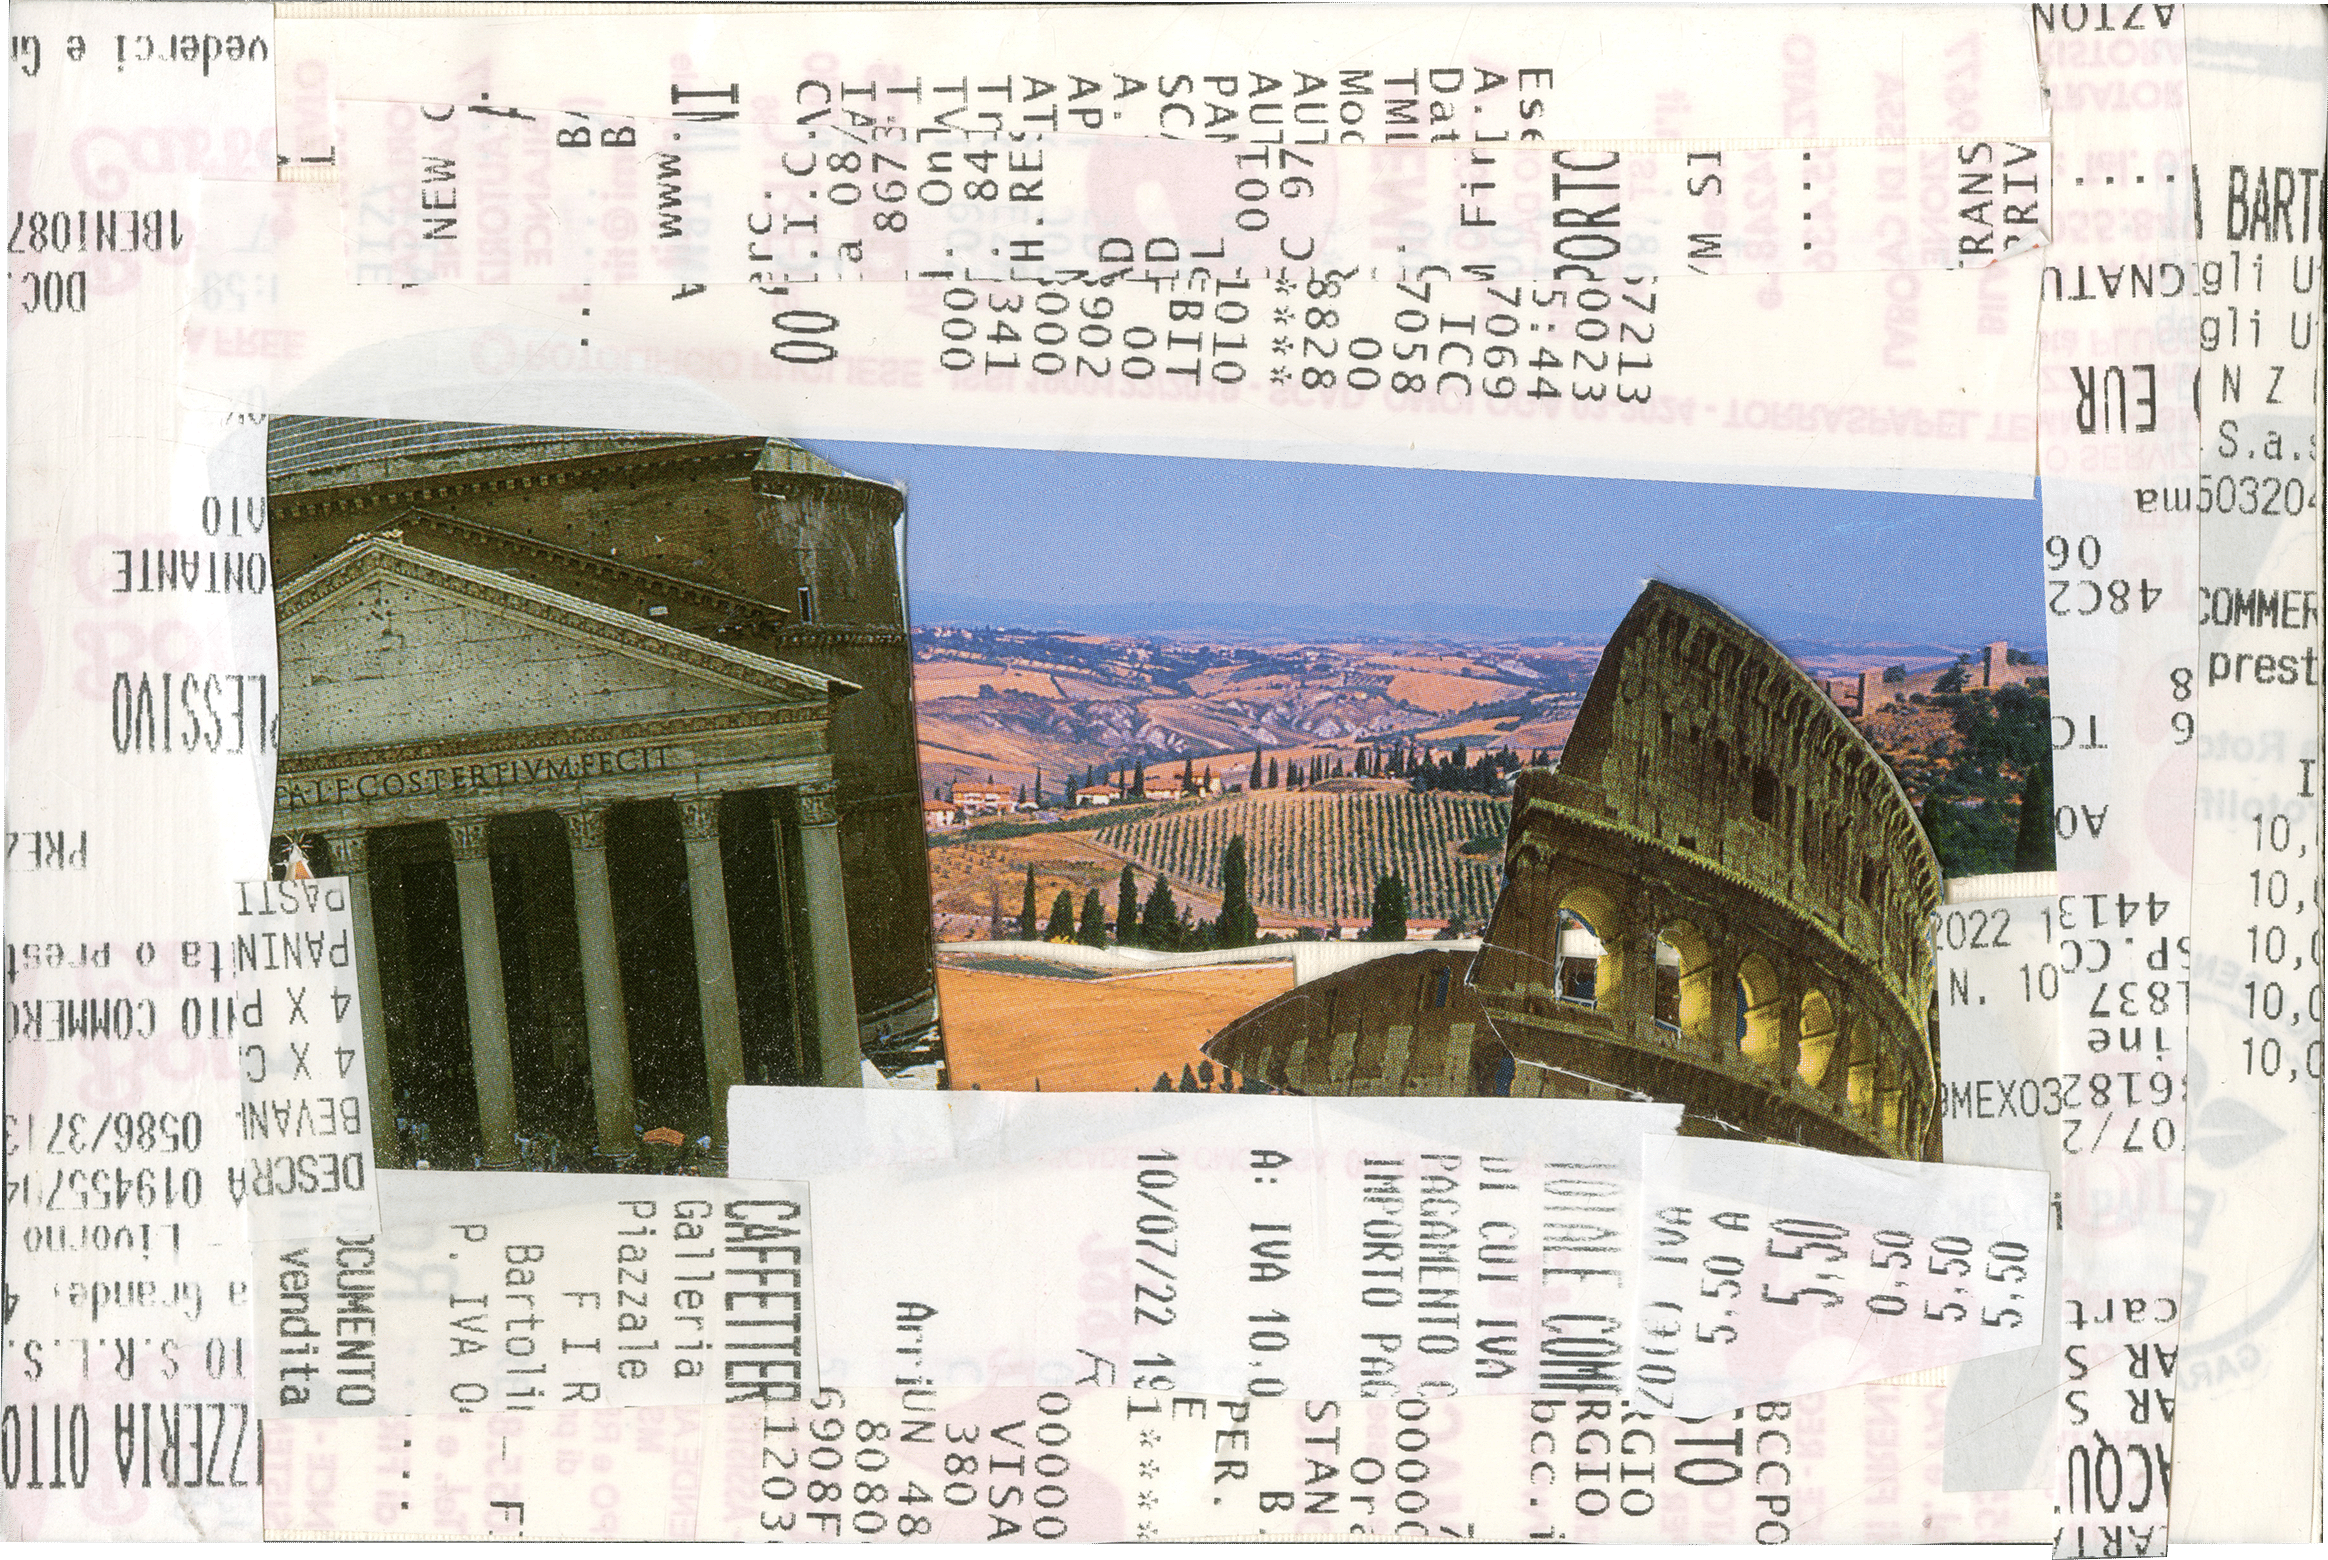 Rome Collage